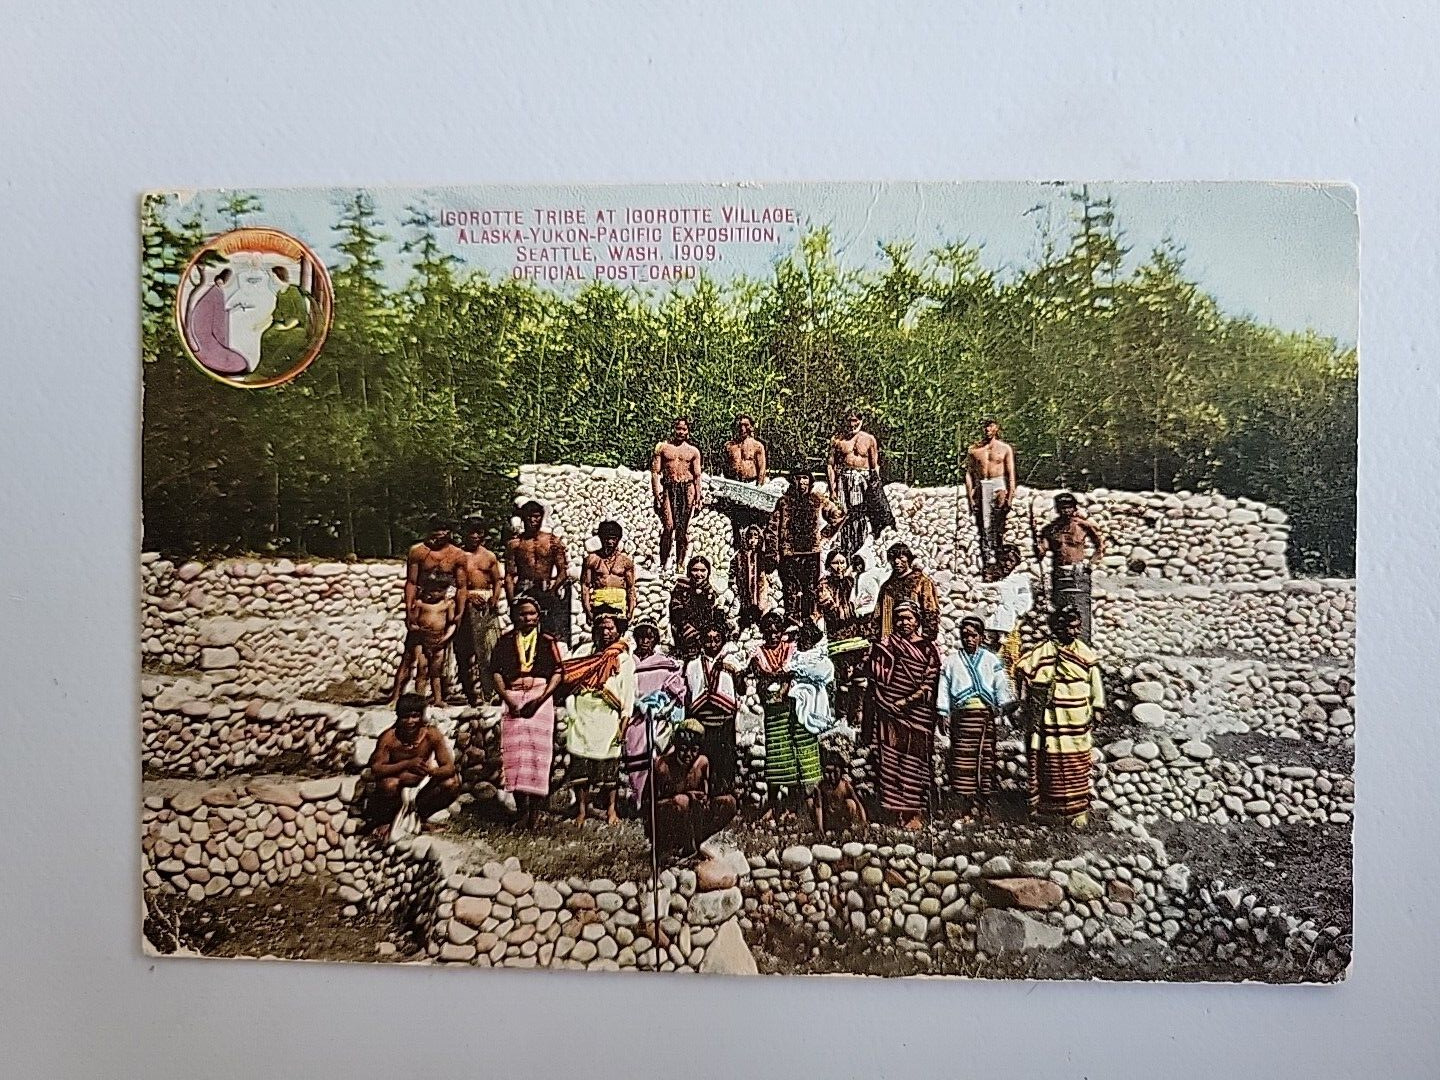 vintage postcard alaska yukon pacific exhibition 1909 Igorotte tribe worlds fair